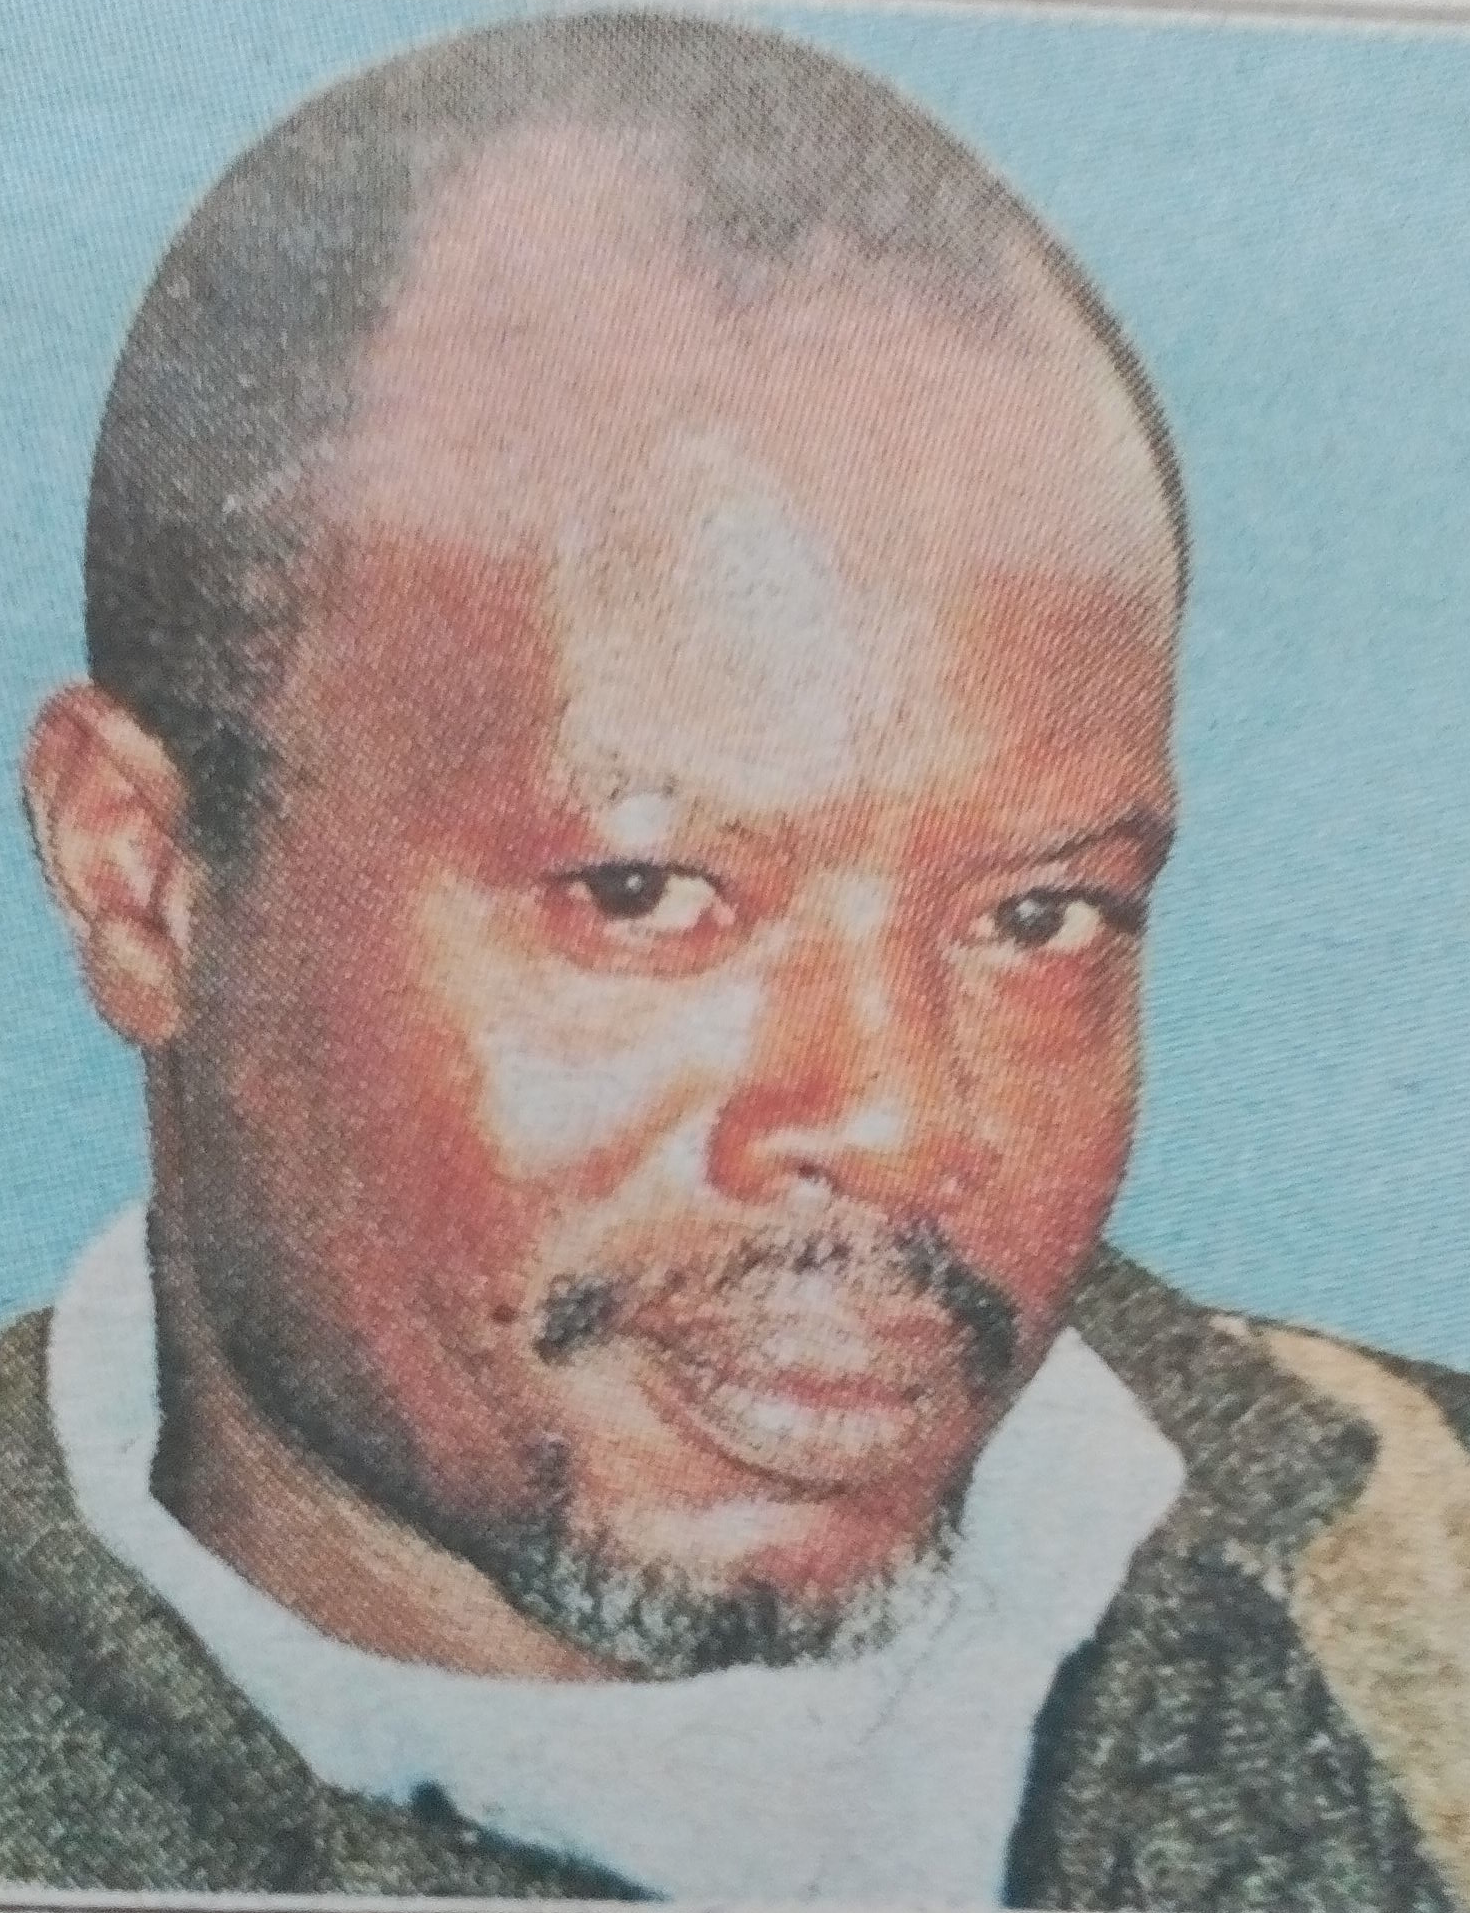 Obituary Image of Brother Raymond Wandera Ayieko